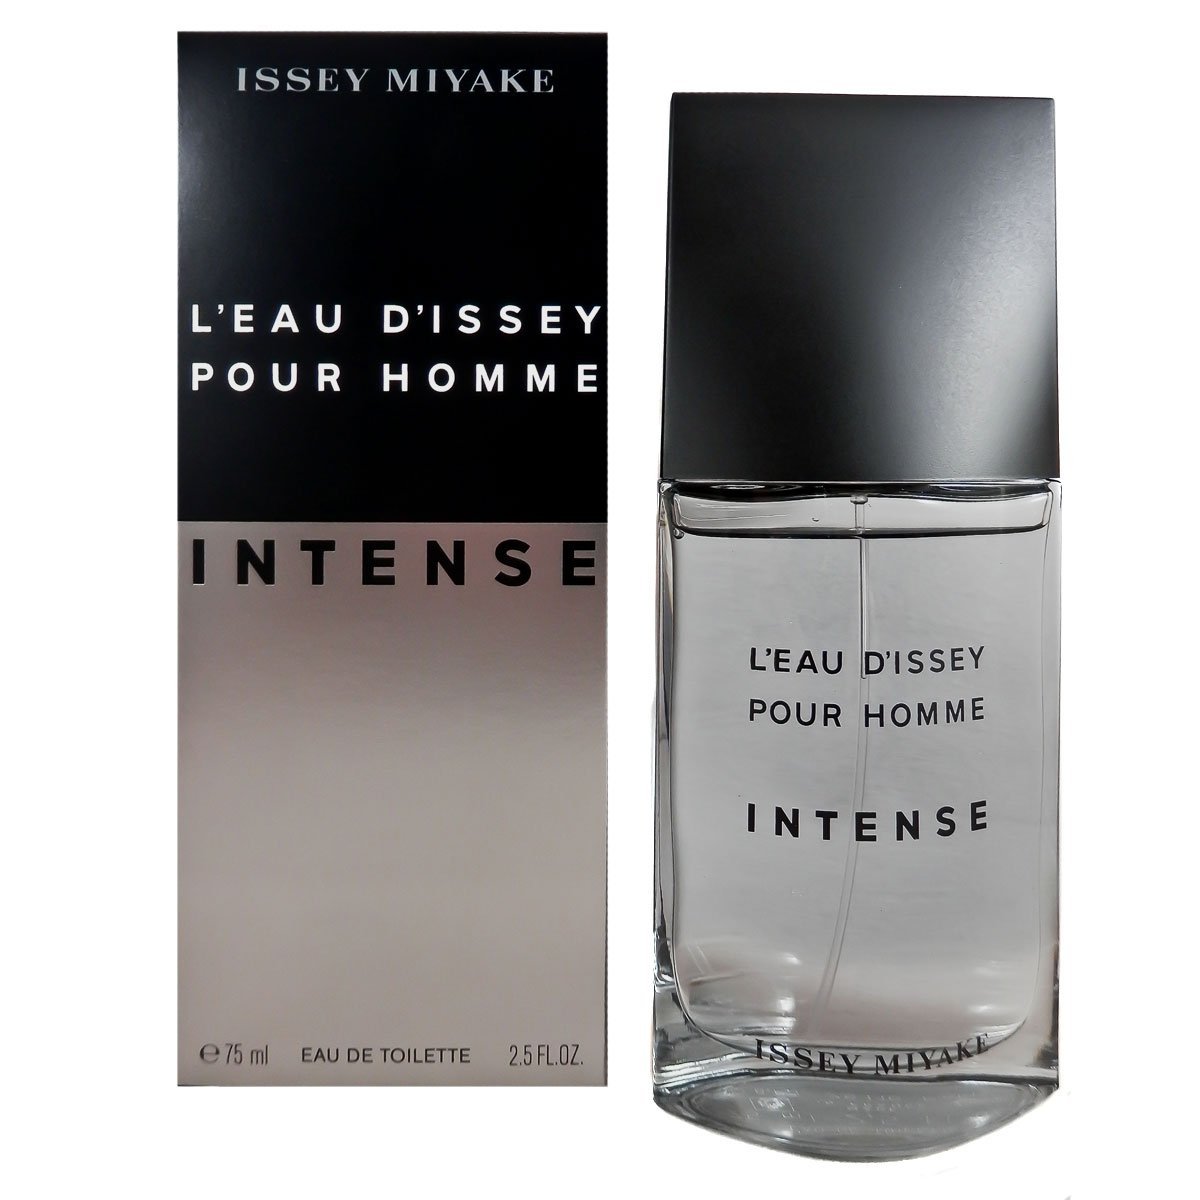 Issey Miyake LEau dIssey Pour Homme Intense Eau de Toilette 75ml Spray